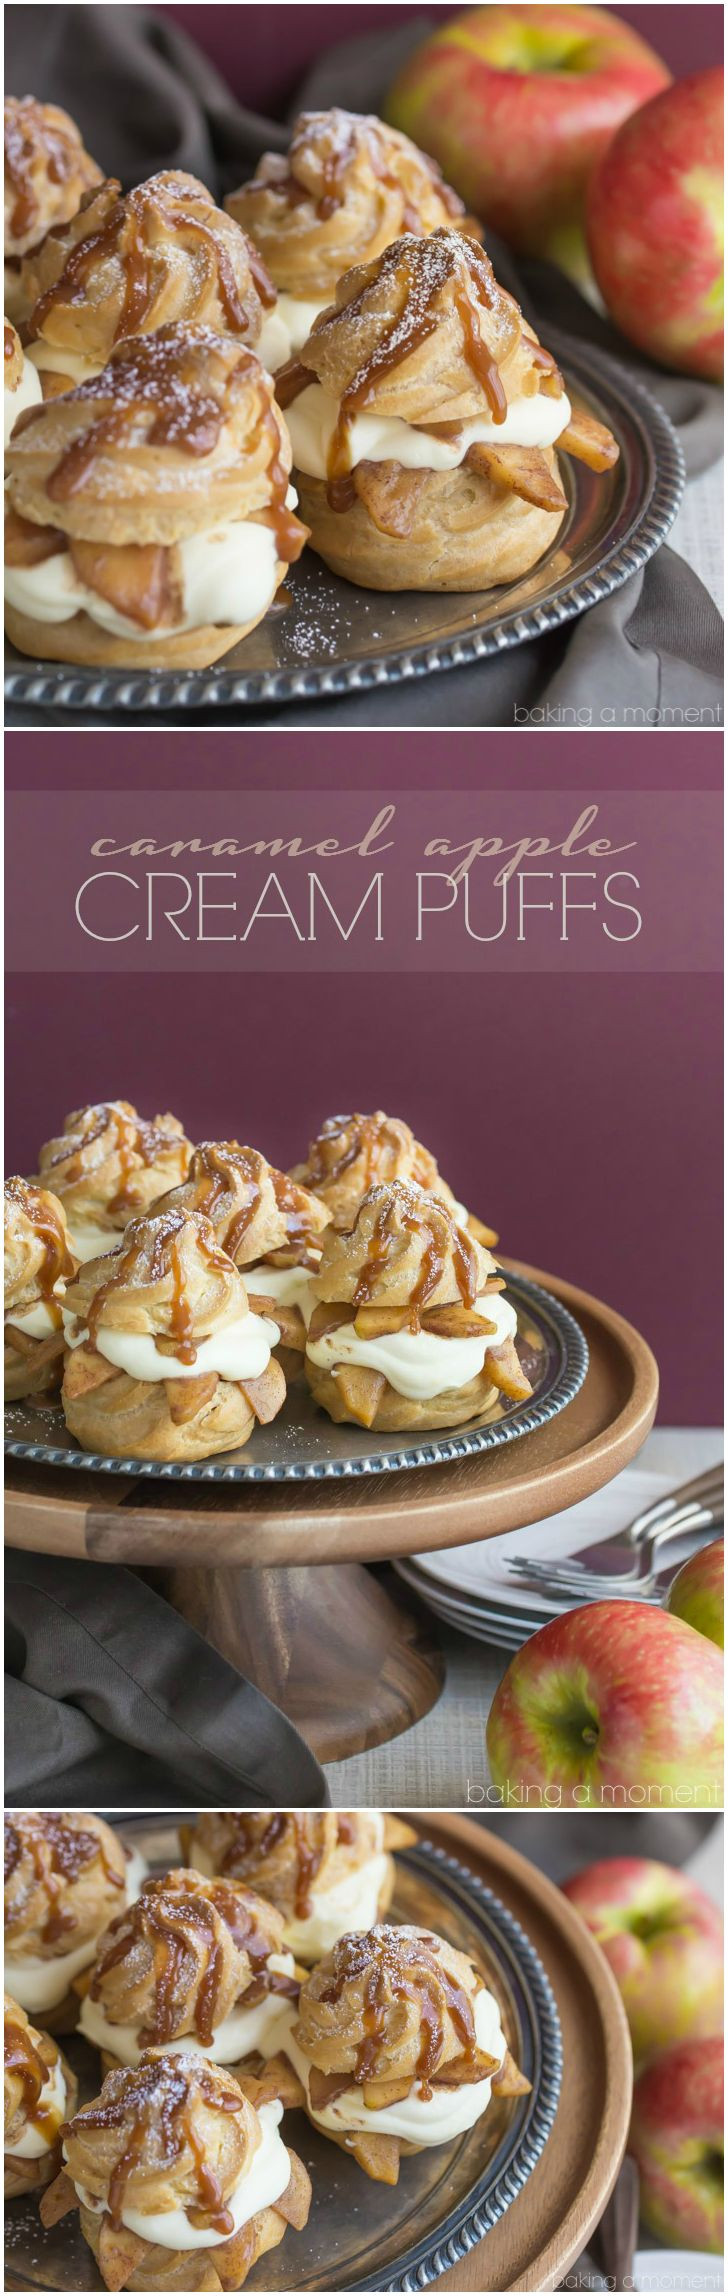 Great Fall Desserts
 Best 25 Recipe for cream puffs ideas on Pinterest